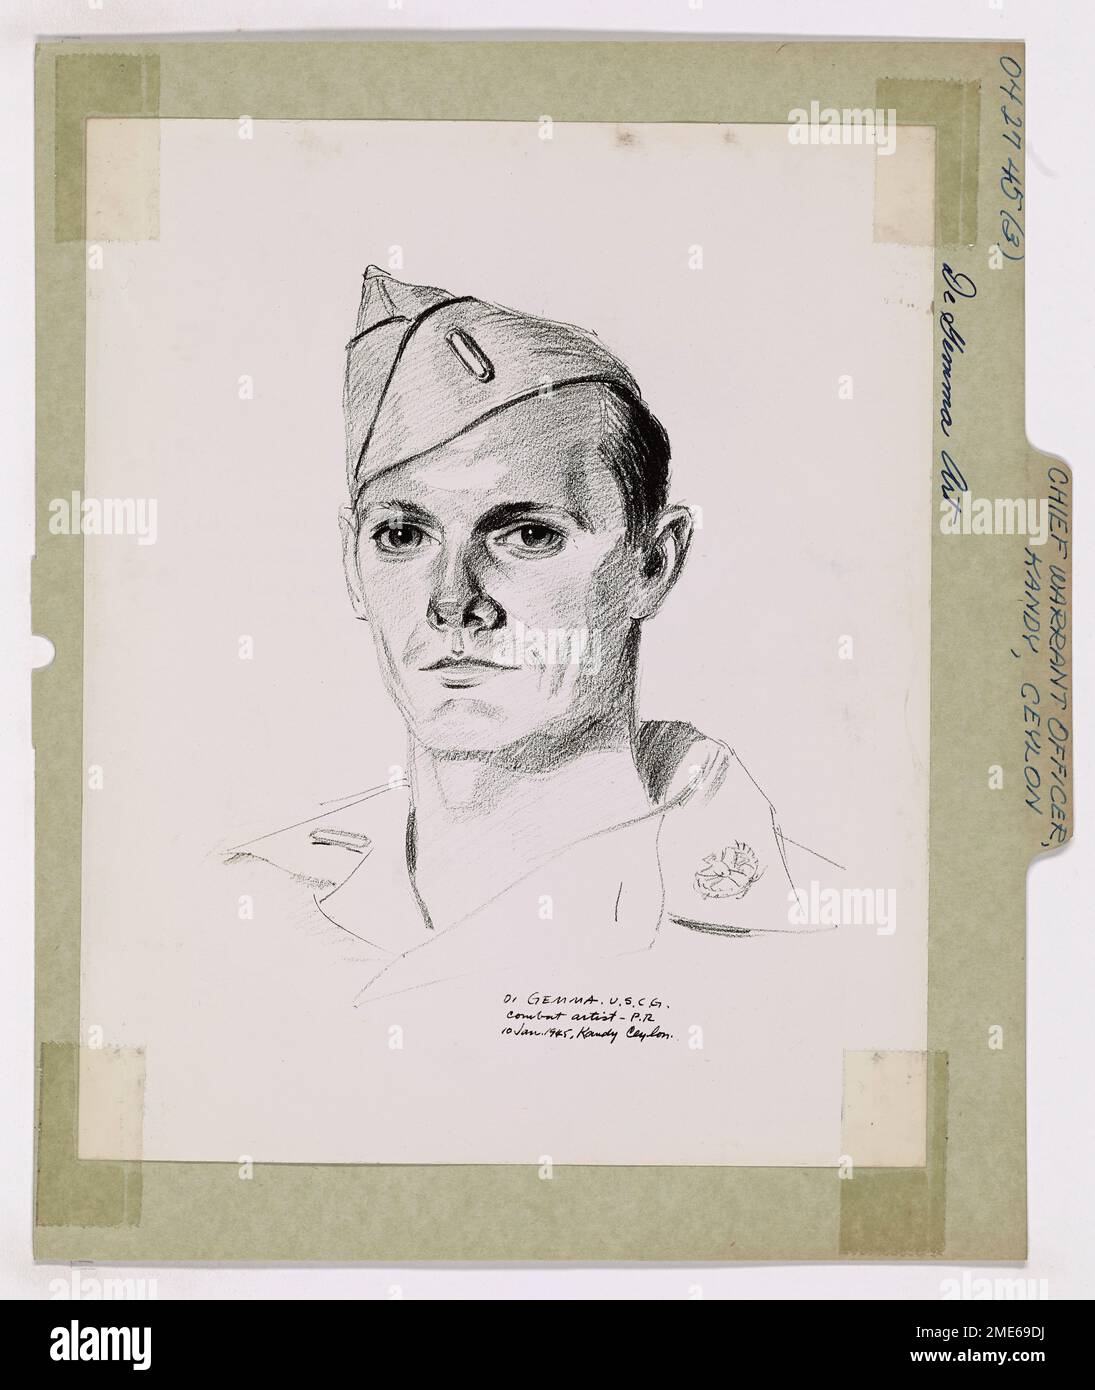 Chief Warrant Officer, Kandy, Ceylon. This image depicts artwork of Jerry G. Corbett of the U.S. Army, drawn by Coast Guard Combat Artist Joseph di Gemma. Stock Photo